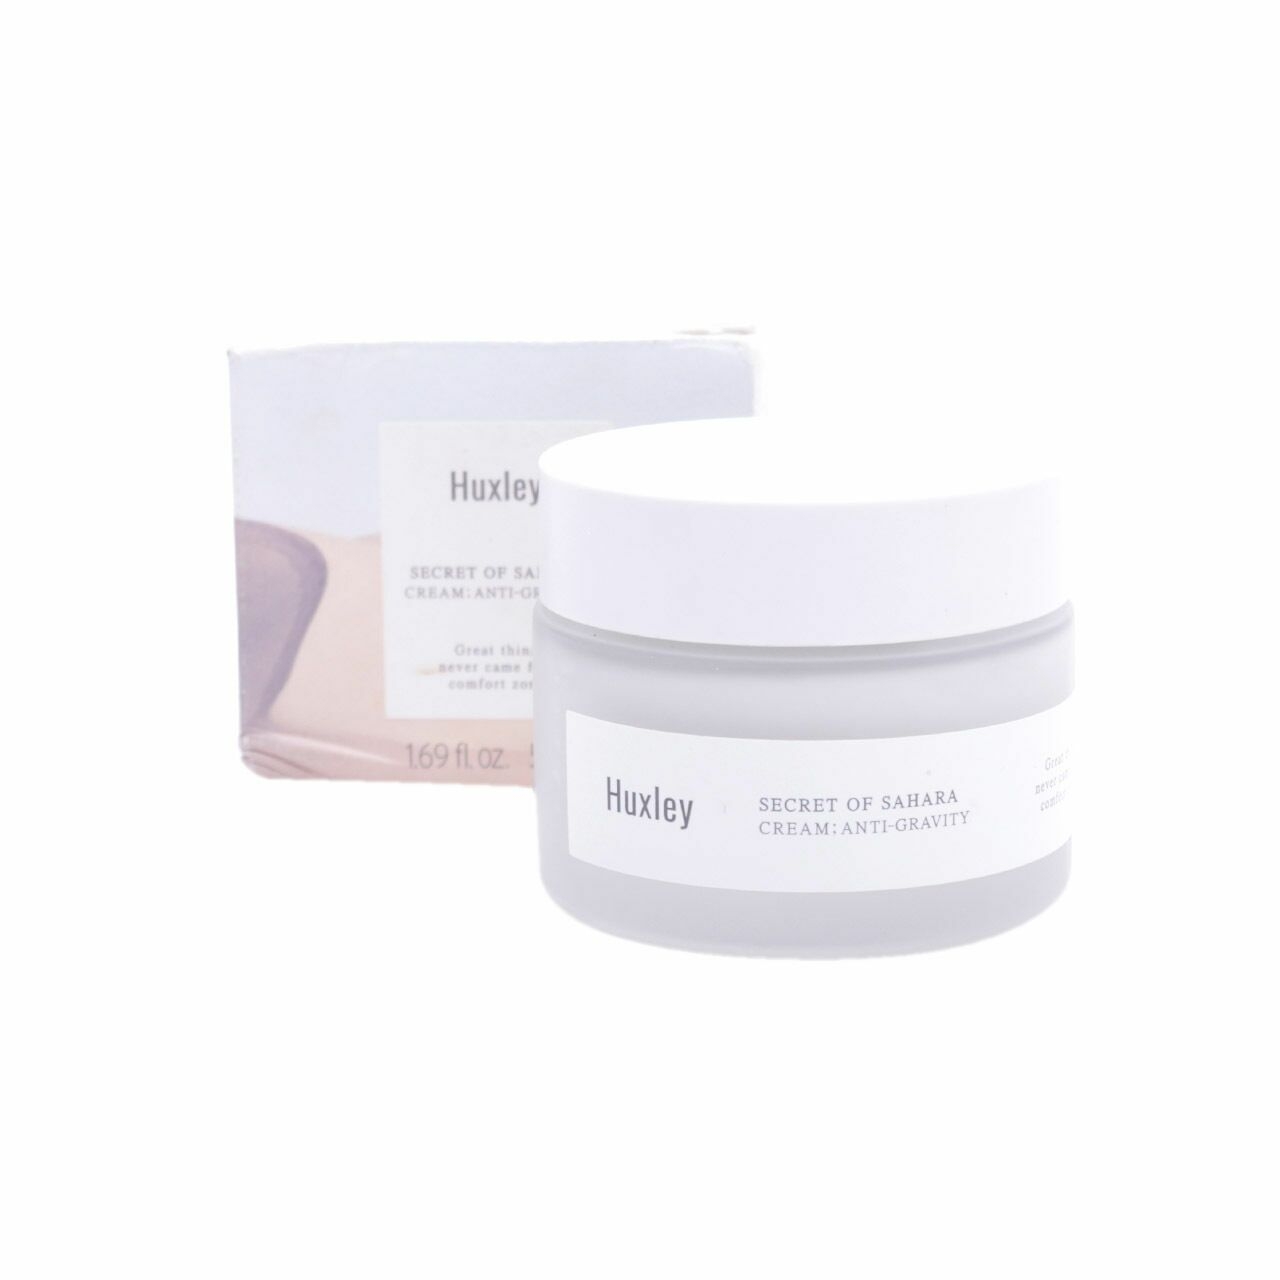 Huxley Secret Of Sahara Cream Anti Gravity Skin Care